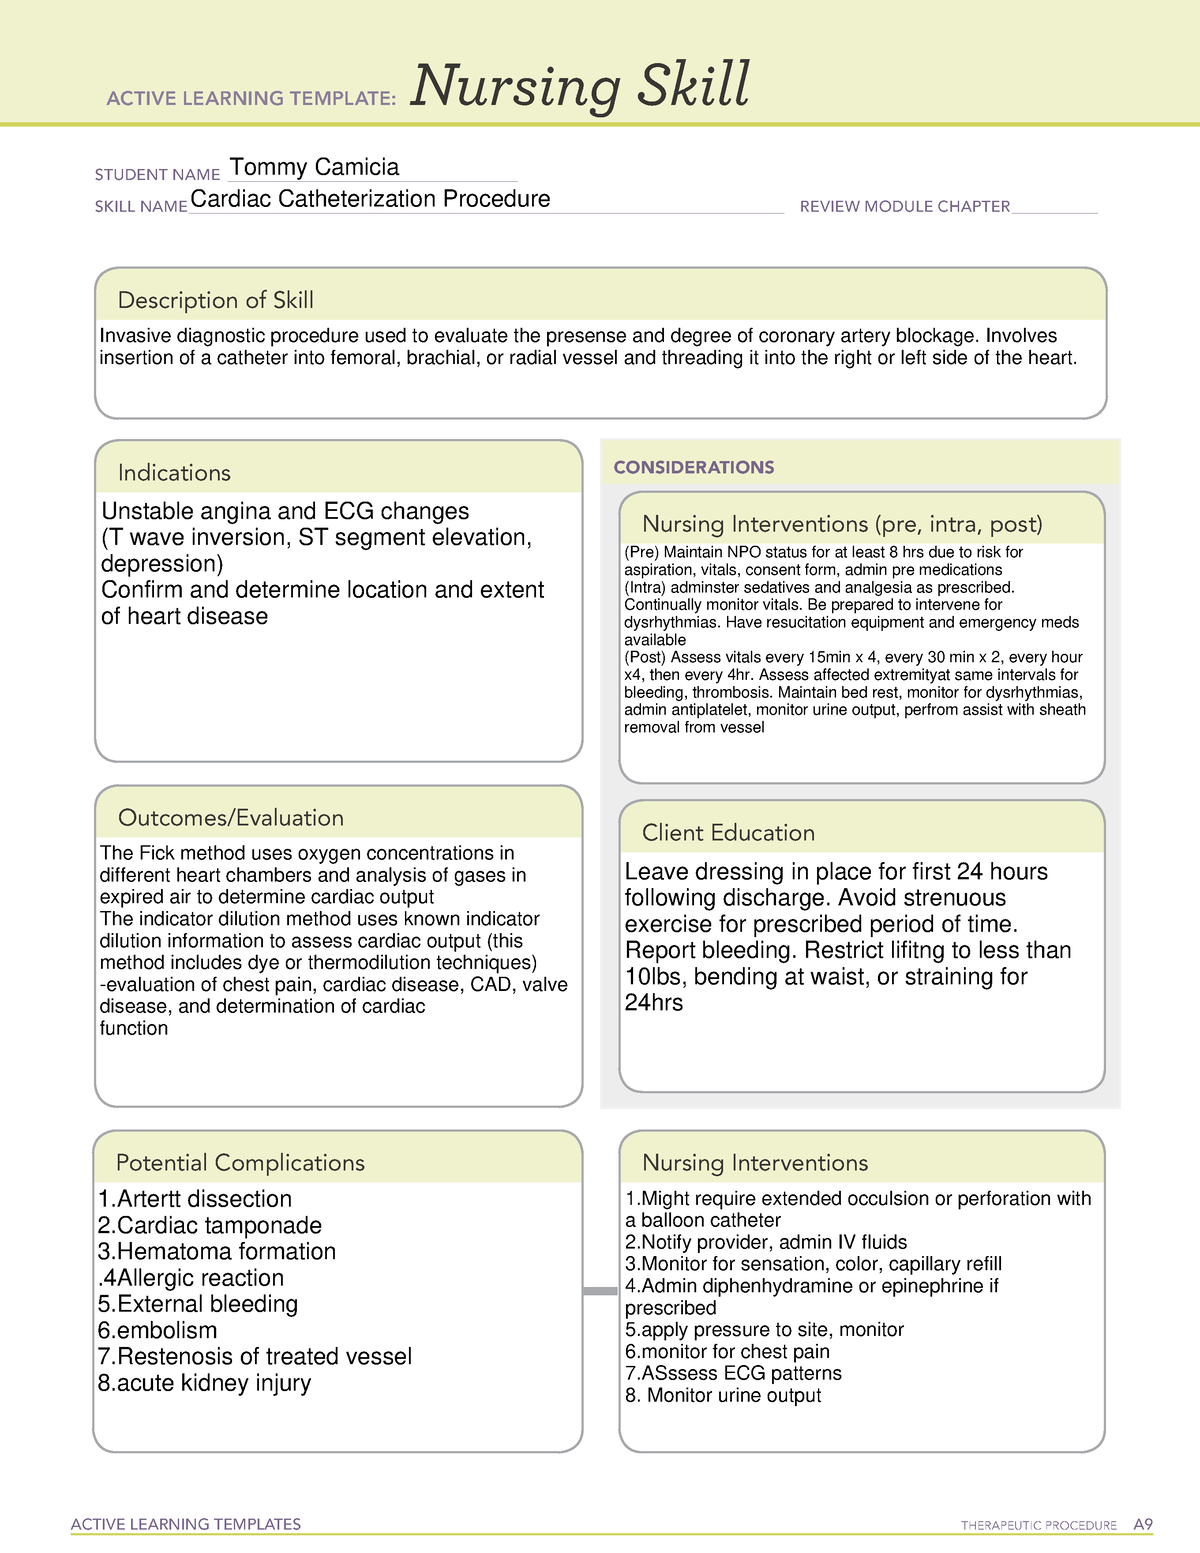 ati-template-nursing-skill-cardiac-catheterization-active-learning